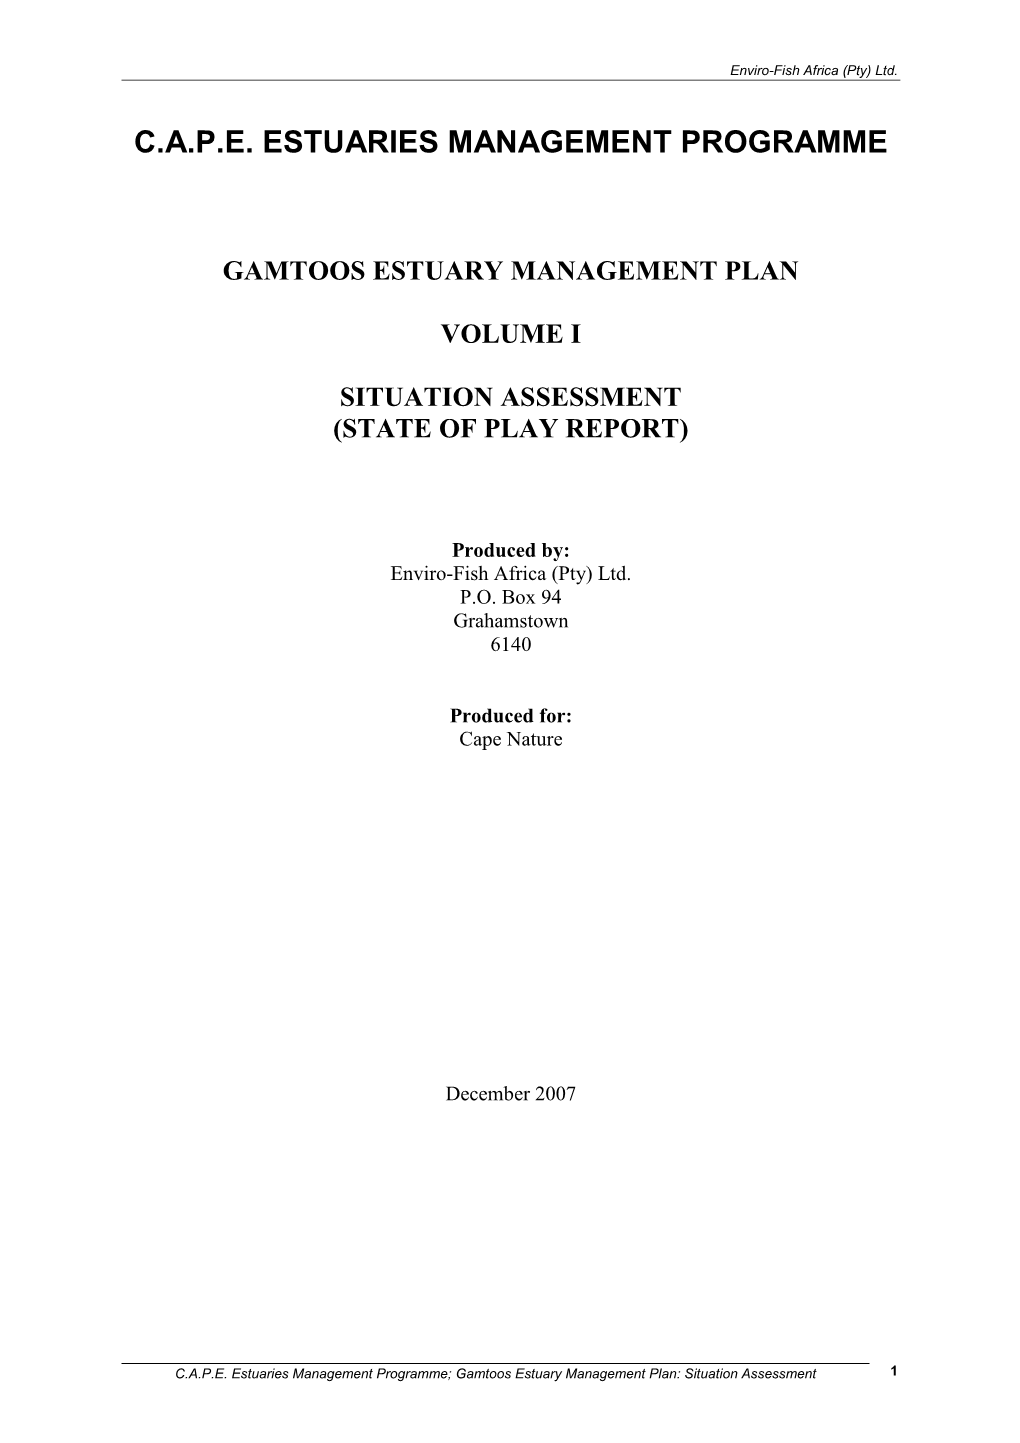 Gamtoos Estuary Management Plan Volume I Situation Assessment